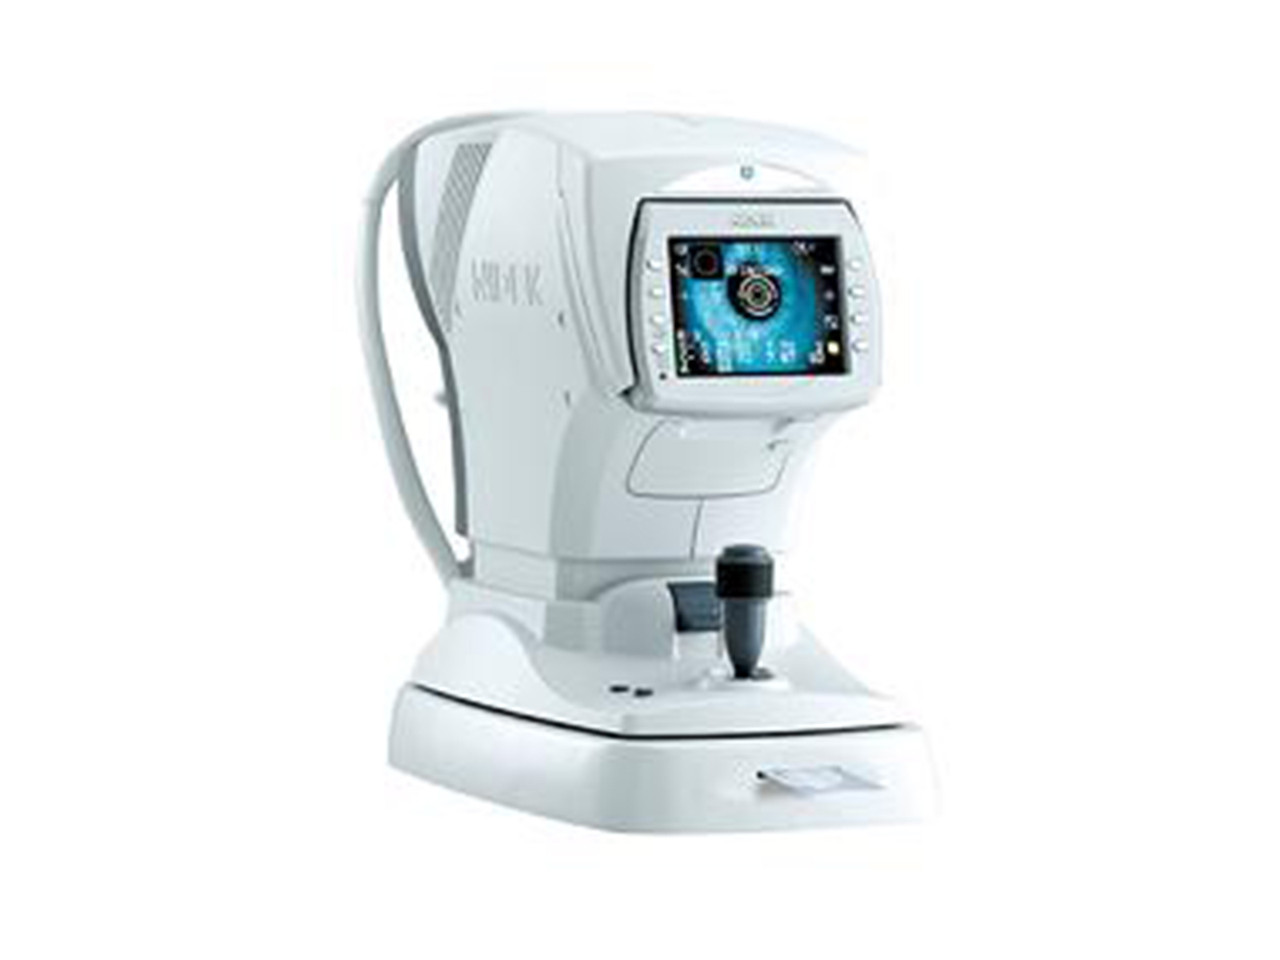 Topcon RM-800 Autorefractor / Keratometer - Premier Ophthalmic